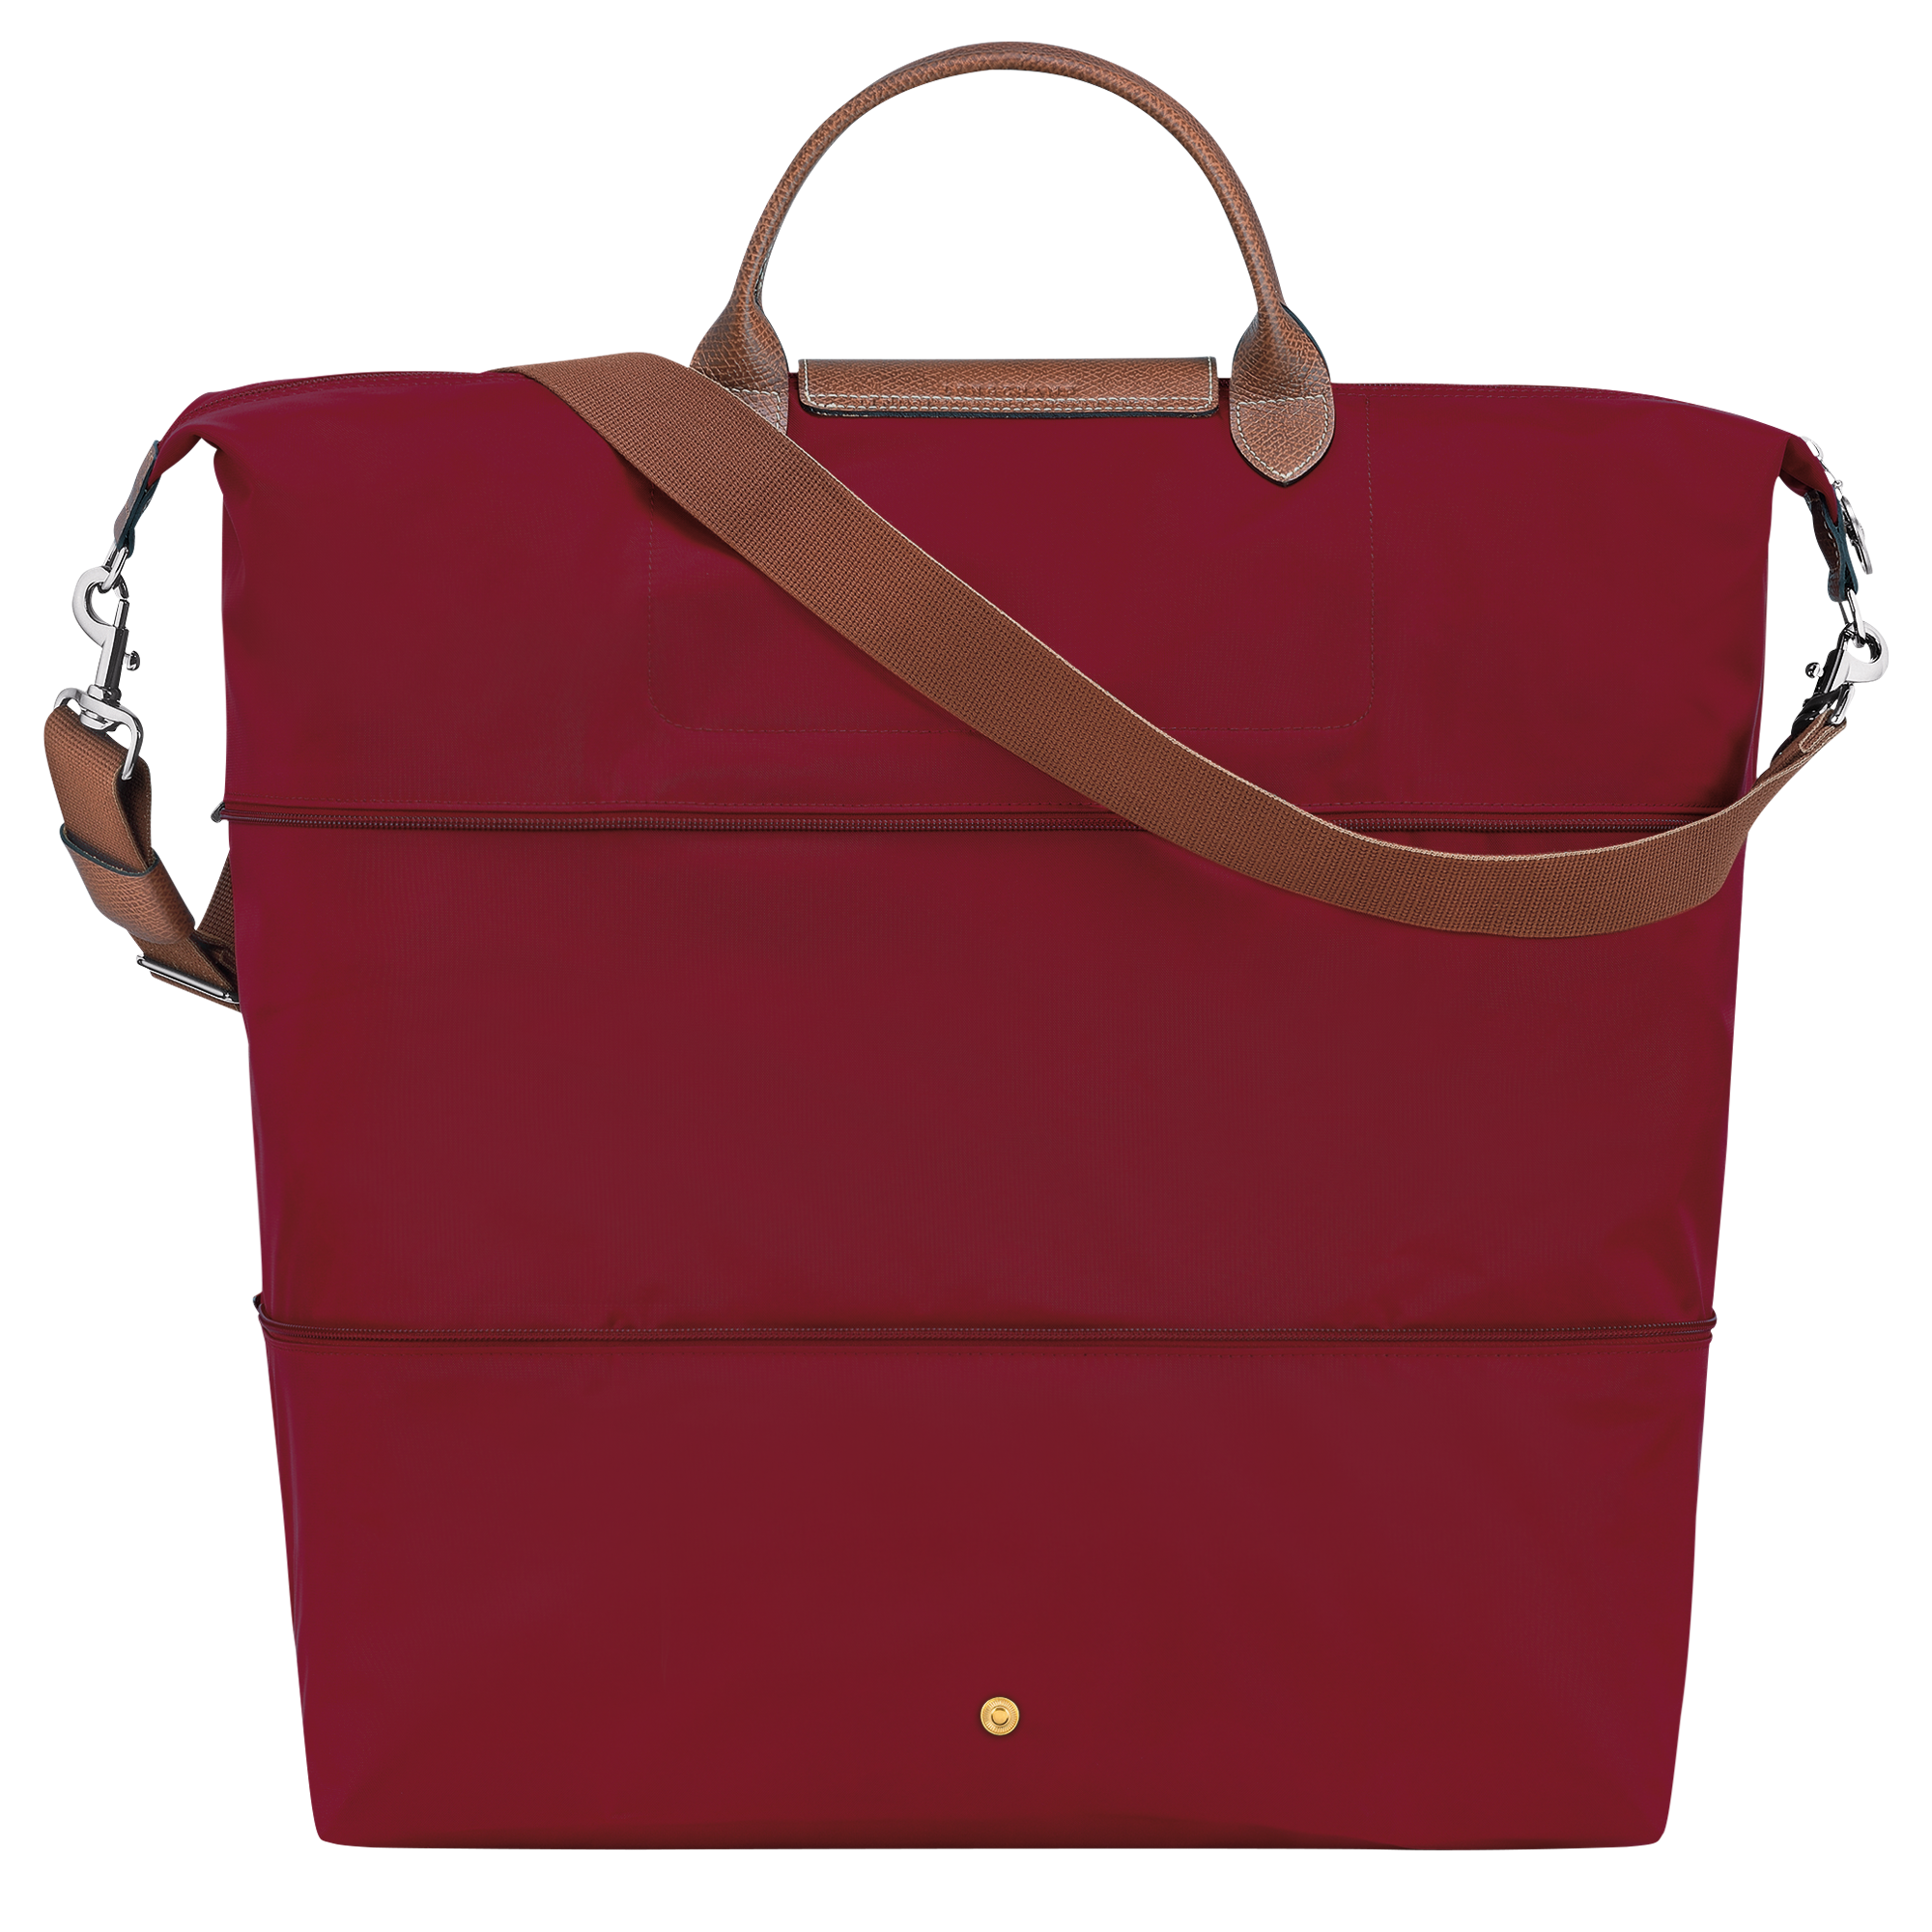 Le Pliage Original 可扩展旅行包, 红色